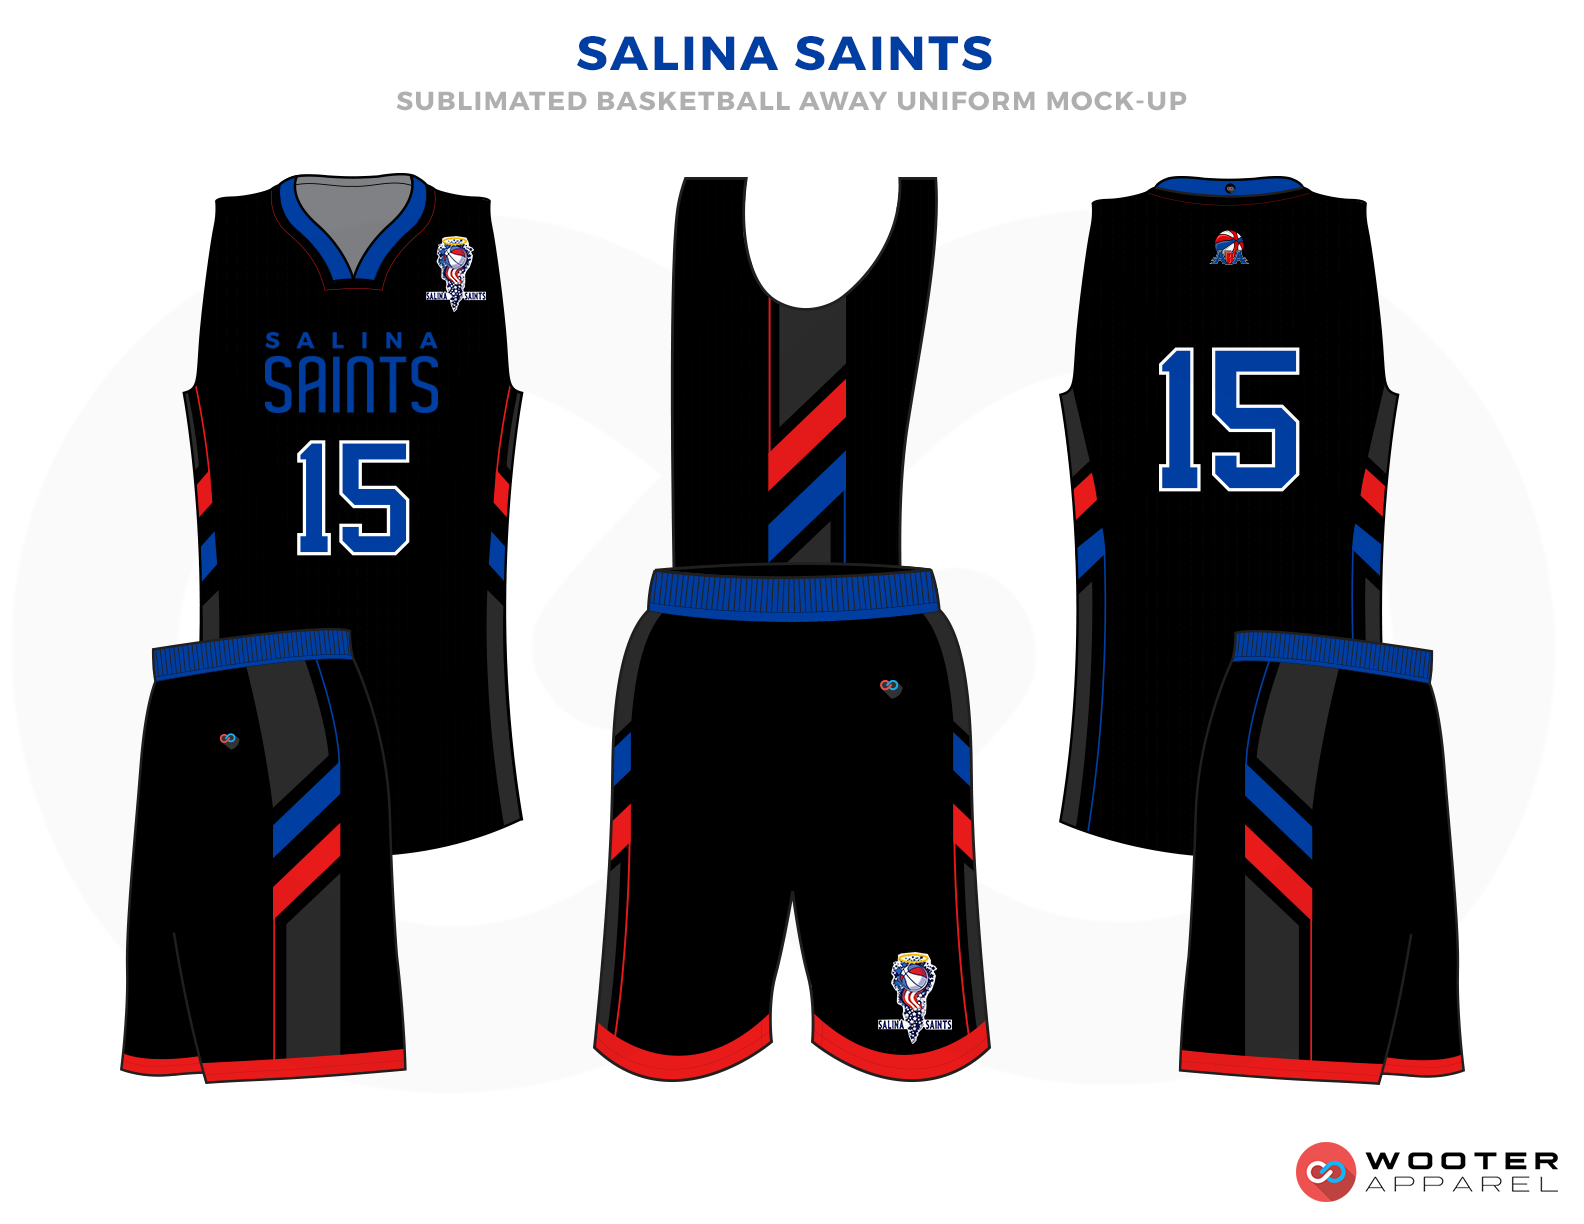 SalinaSaints-BasketballUniform-Away-Mockup.png